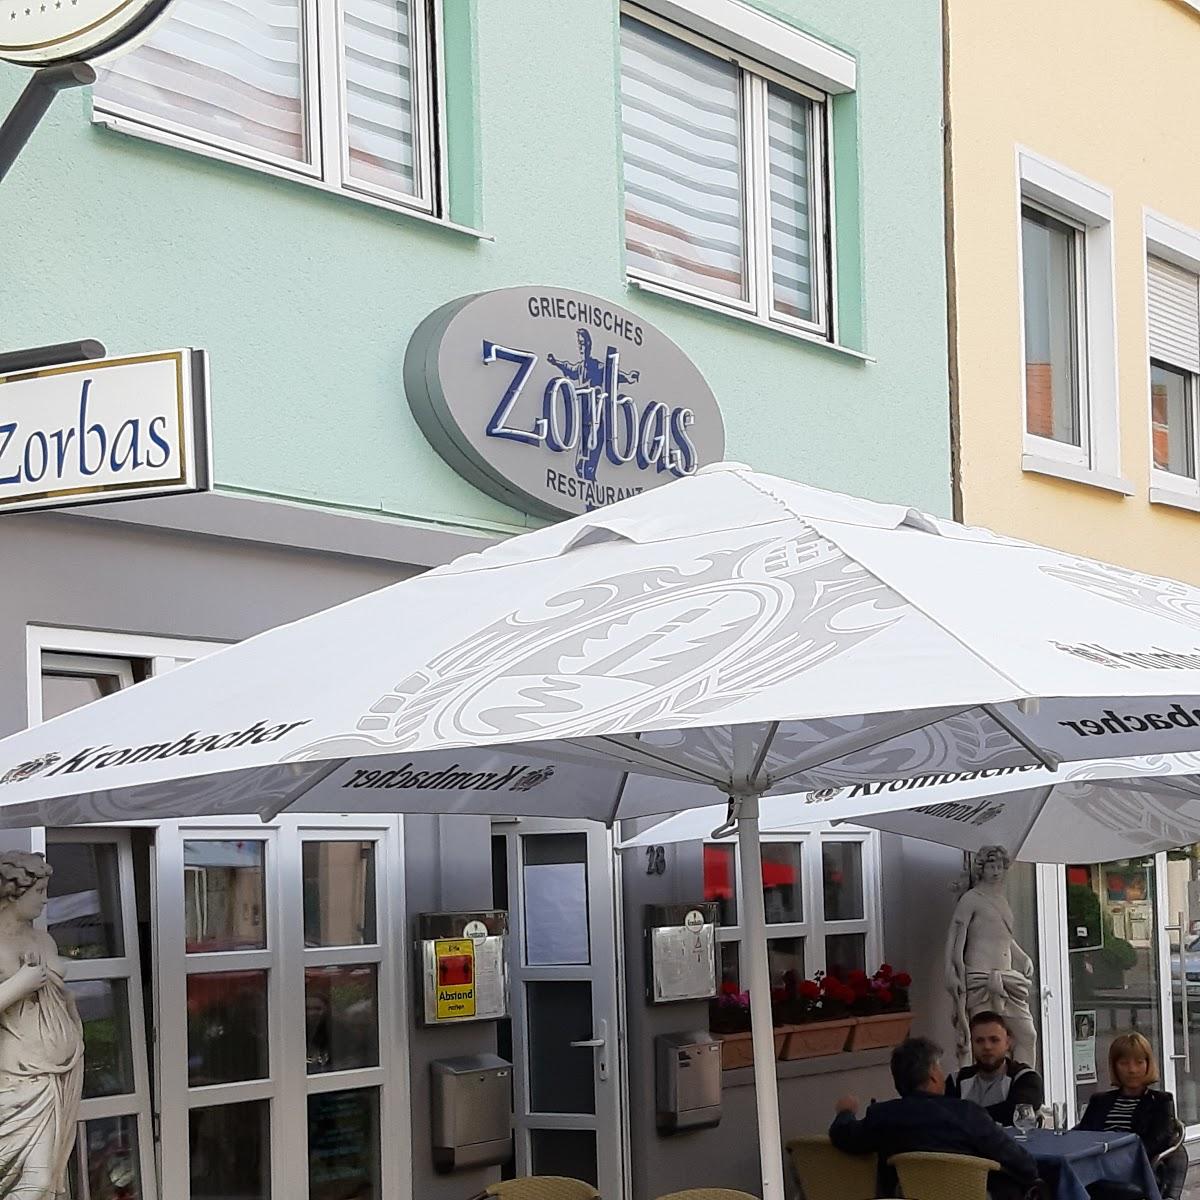 Restaurant "Zorbas" in  Uelzen